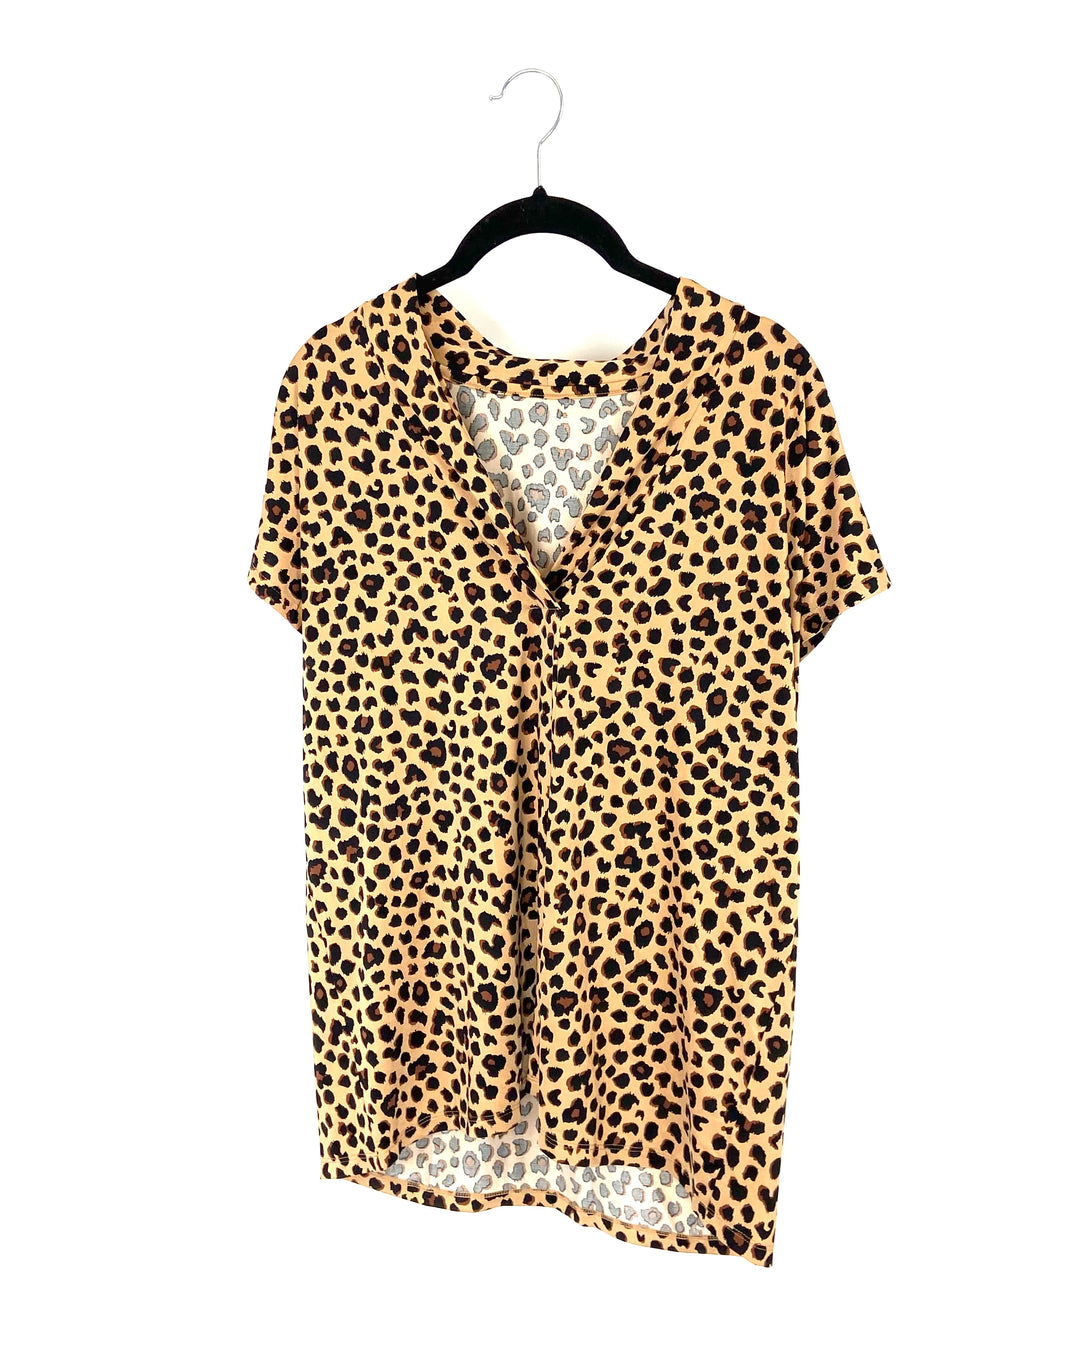 Short Sleeve Cheetah Print Top - Size 6-8